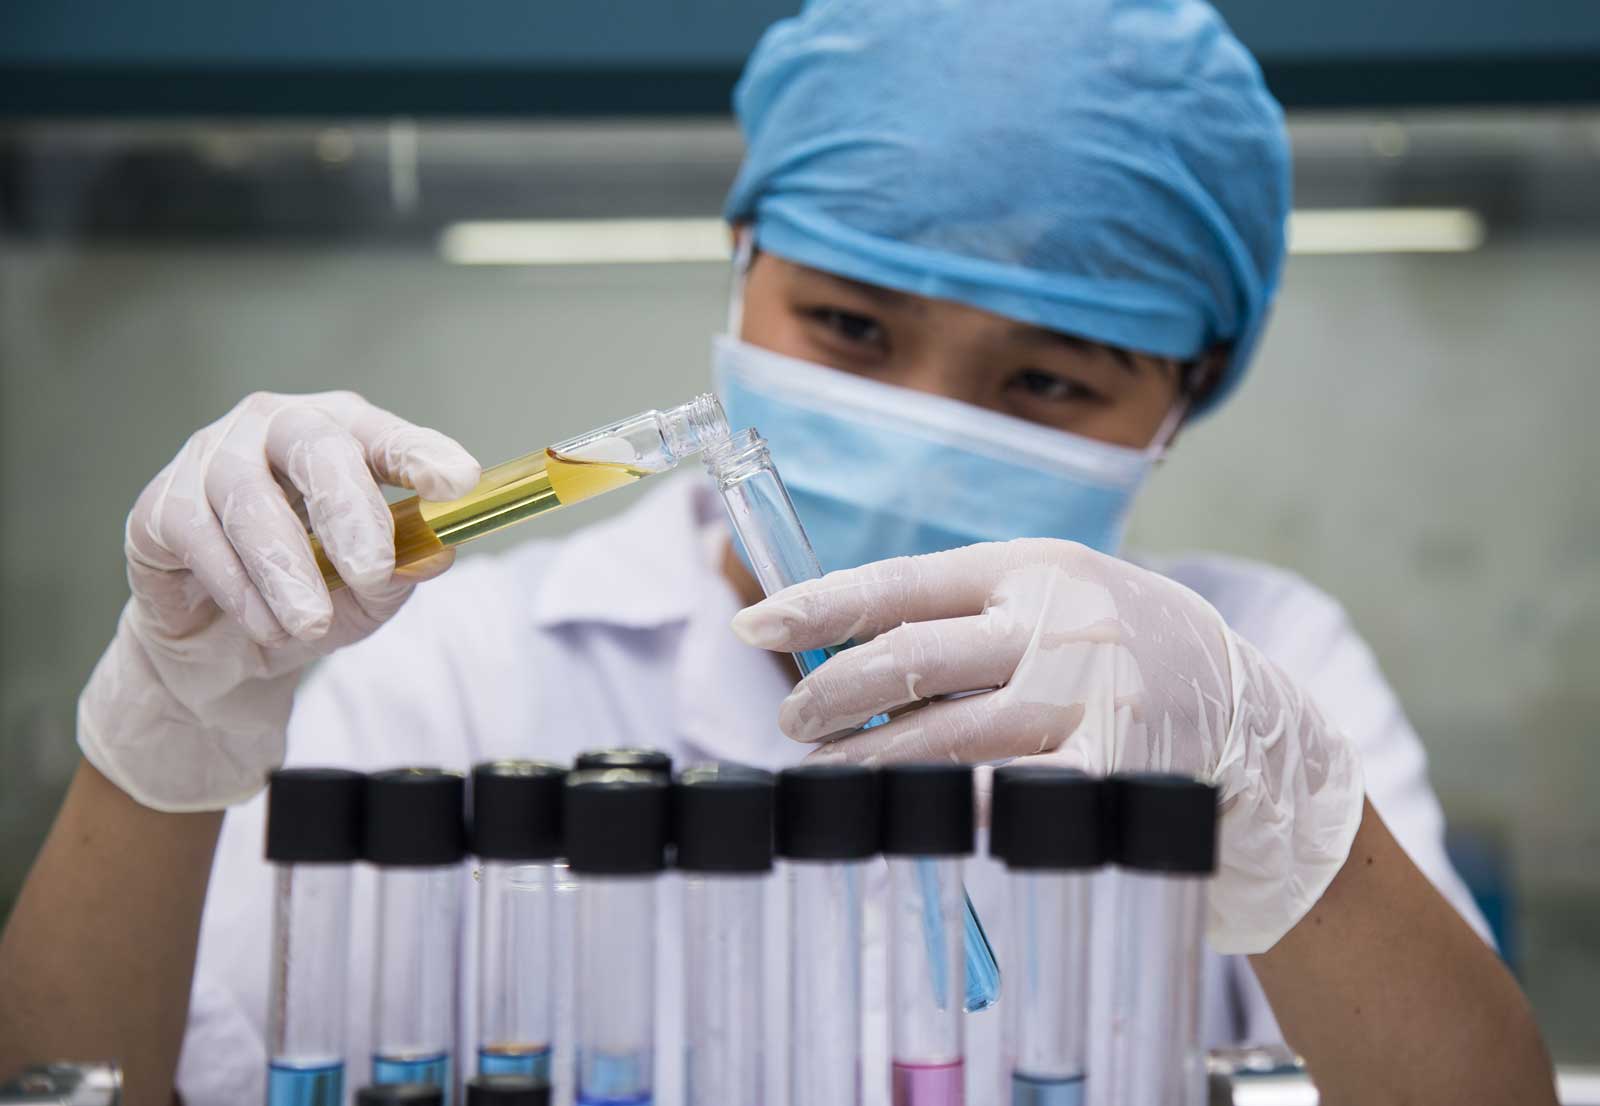 A lab technician pouring liquid into a vial